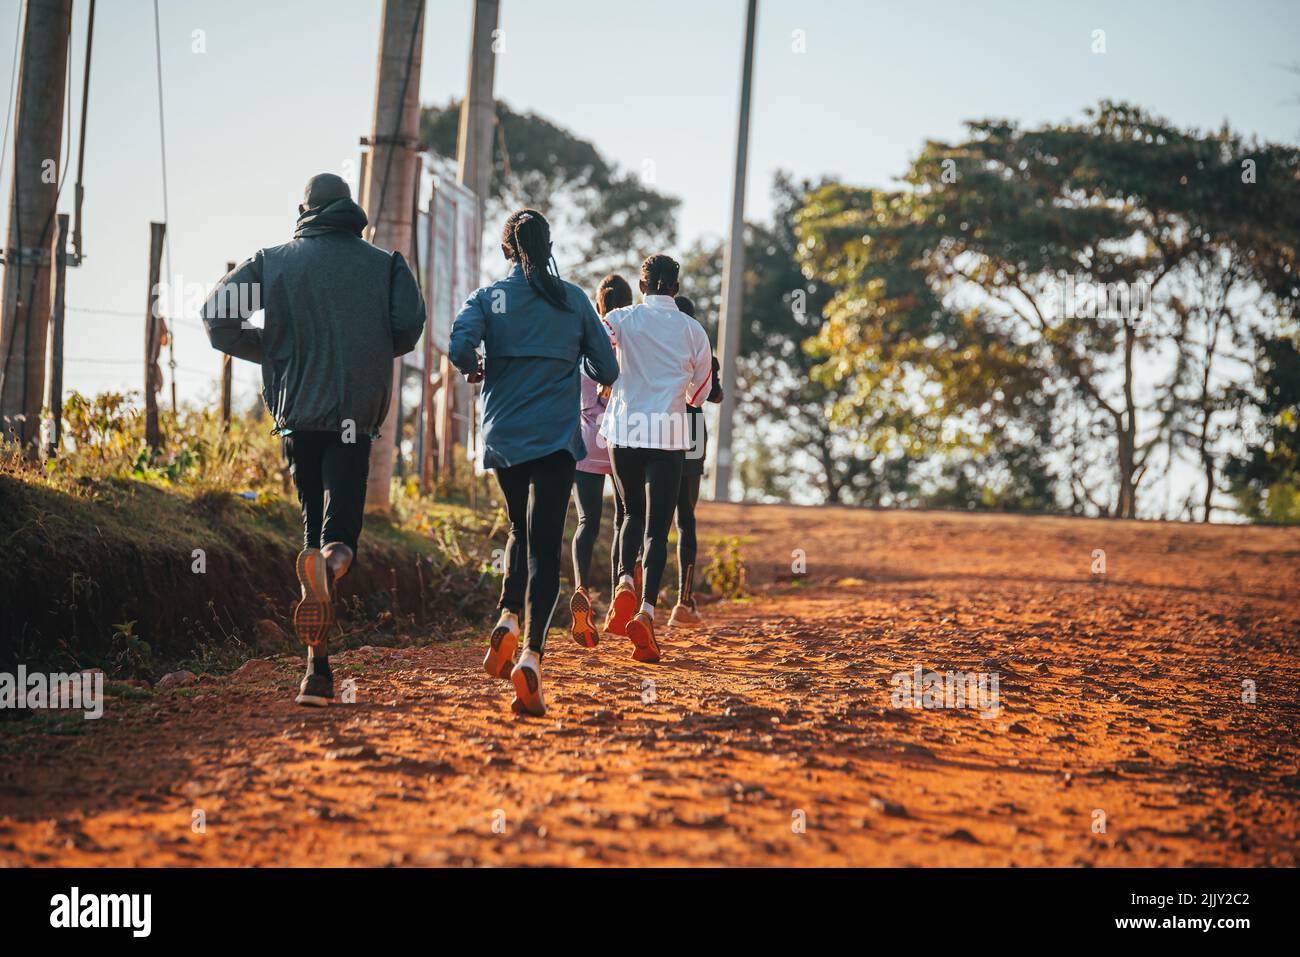 Morning running training in Kenya. A group of endurance runners run on red soil at sunrise. Morning running motivation for training. Stock Photo